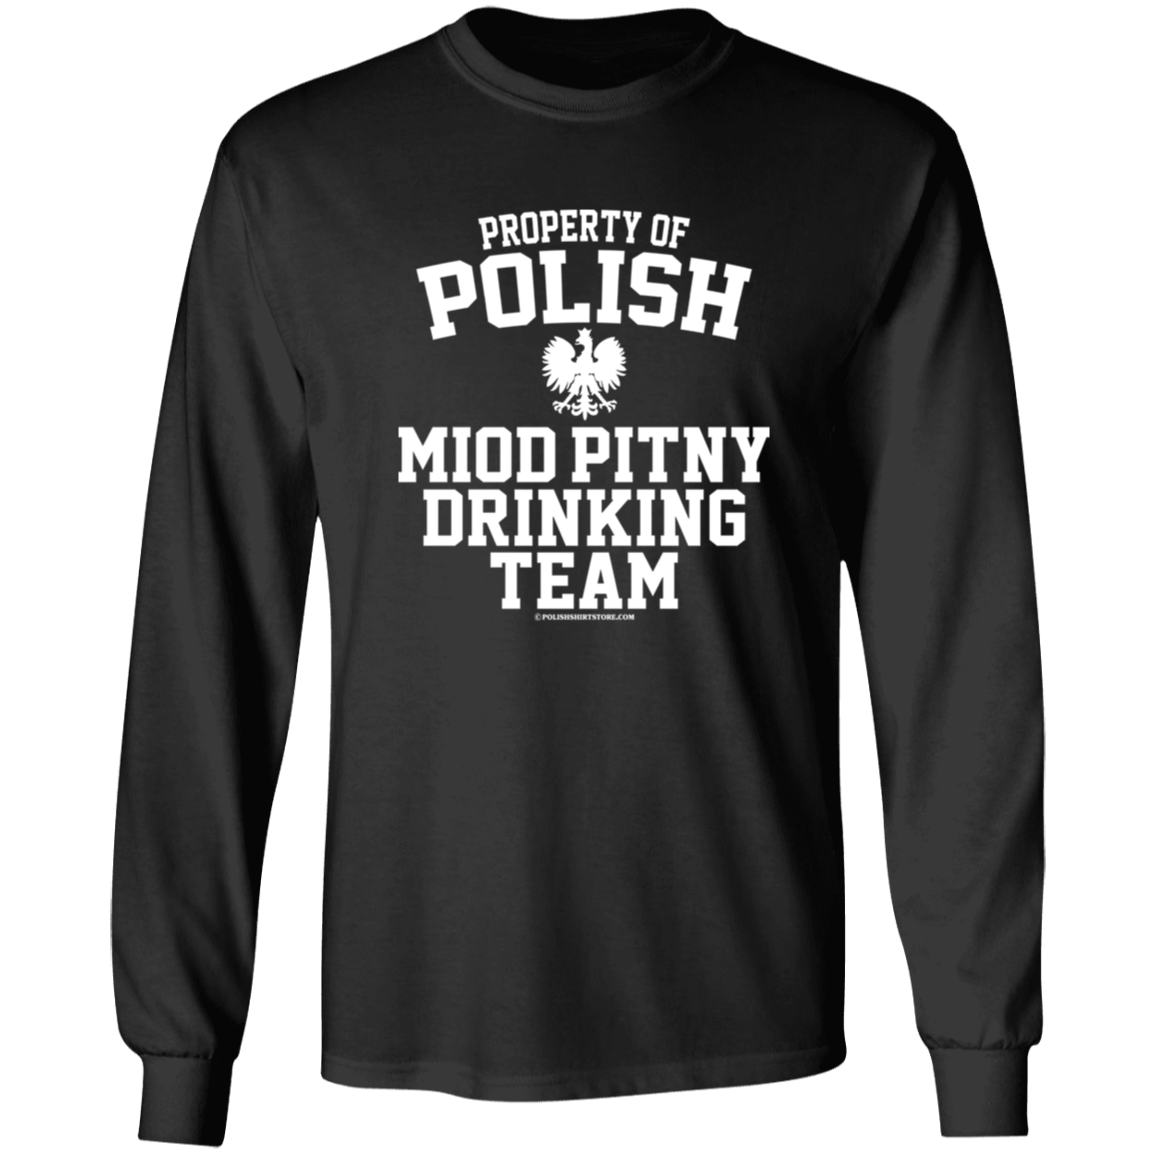 Property of Polish Miod Pitny Drinking Team Apparel CustomCat G240 LS Ultra Cotton T-Shirt Black S